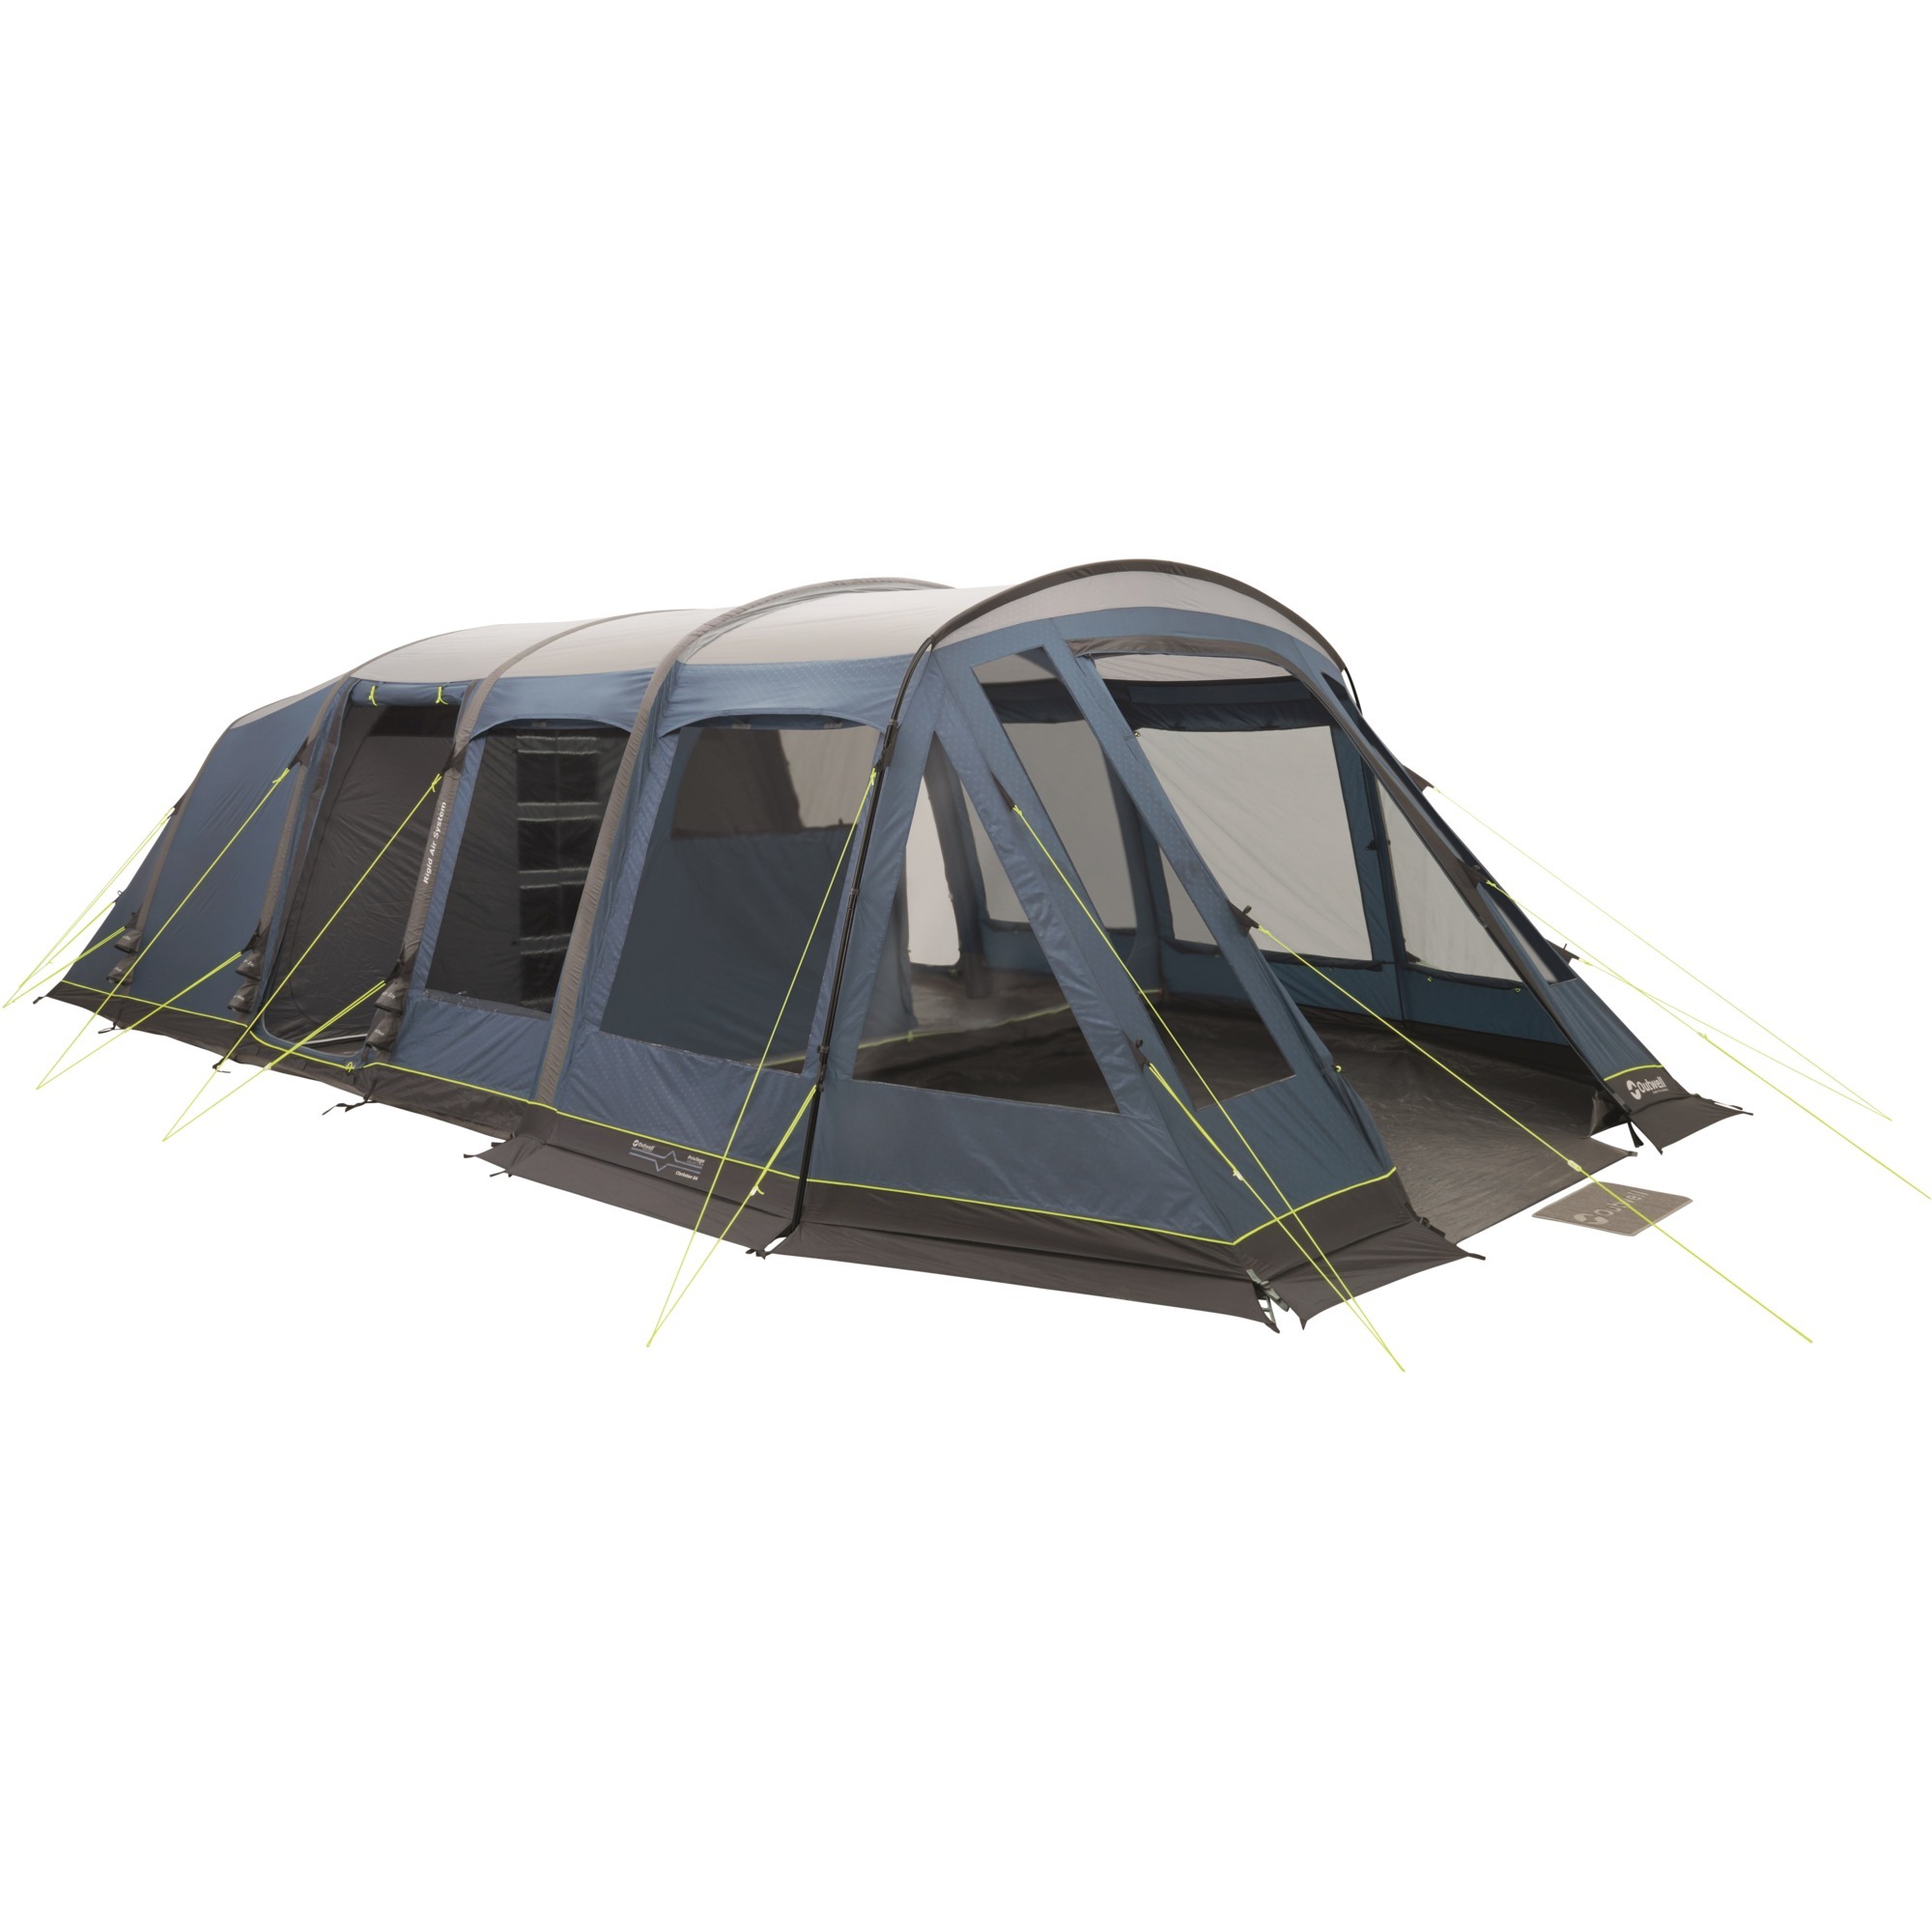 Clarkston 6A, Tent